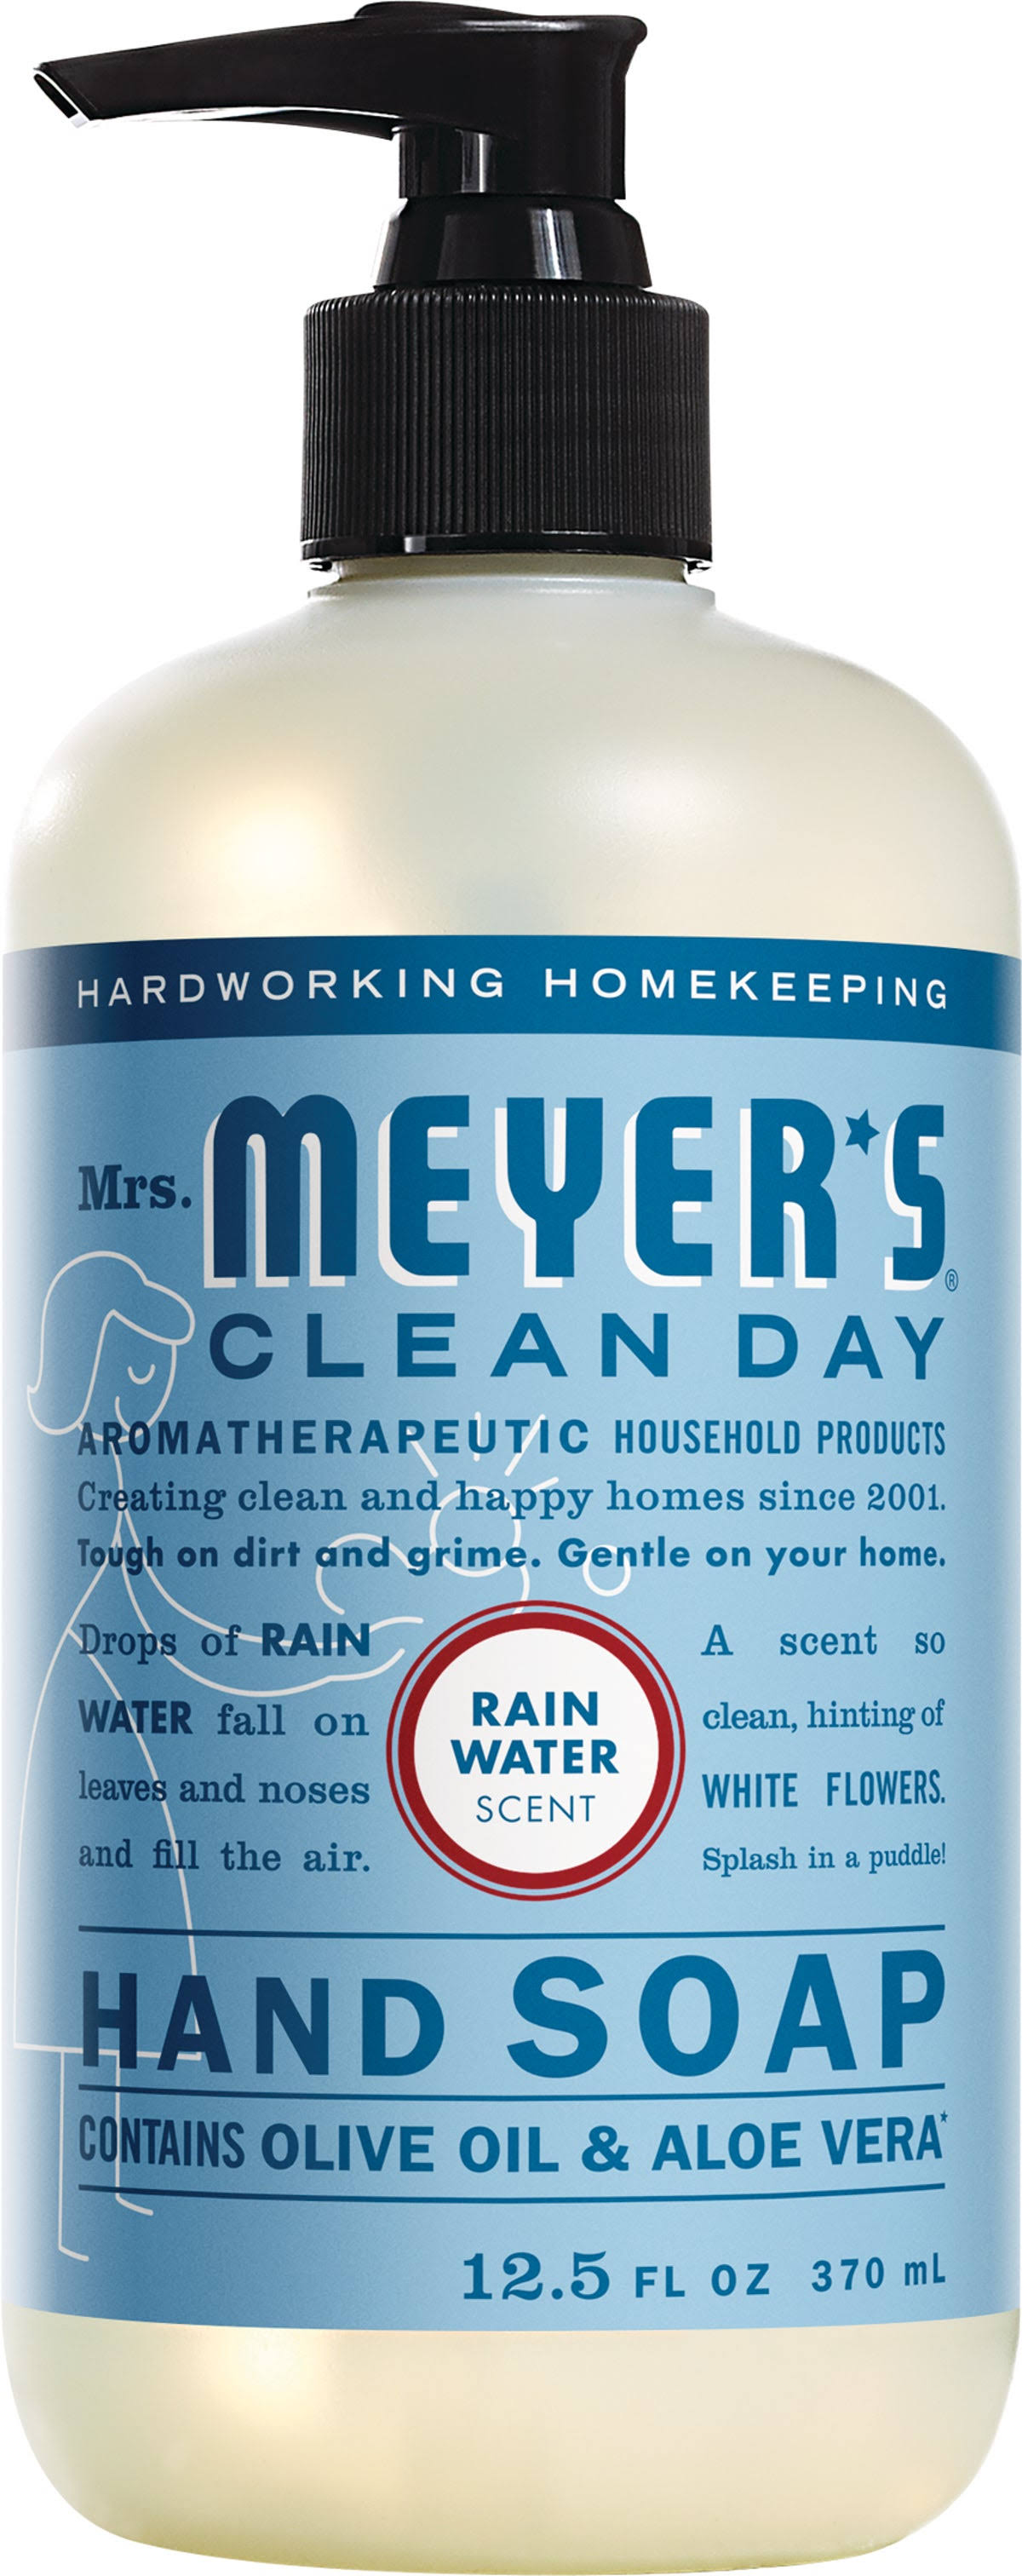 Mrs. Meyer's Clean Day Liquid Hand Soap Rain Water 12.5 fl oz